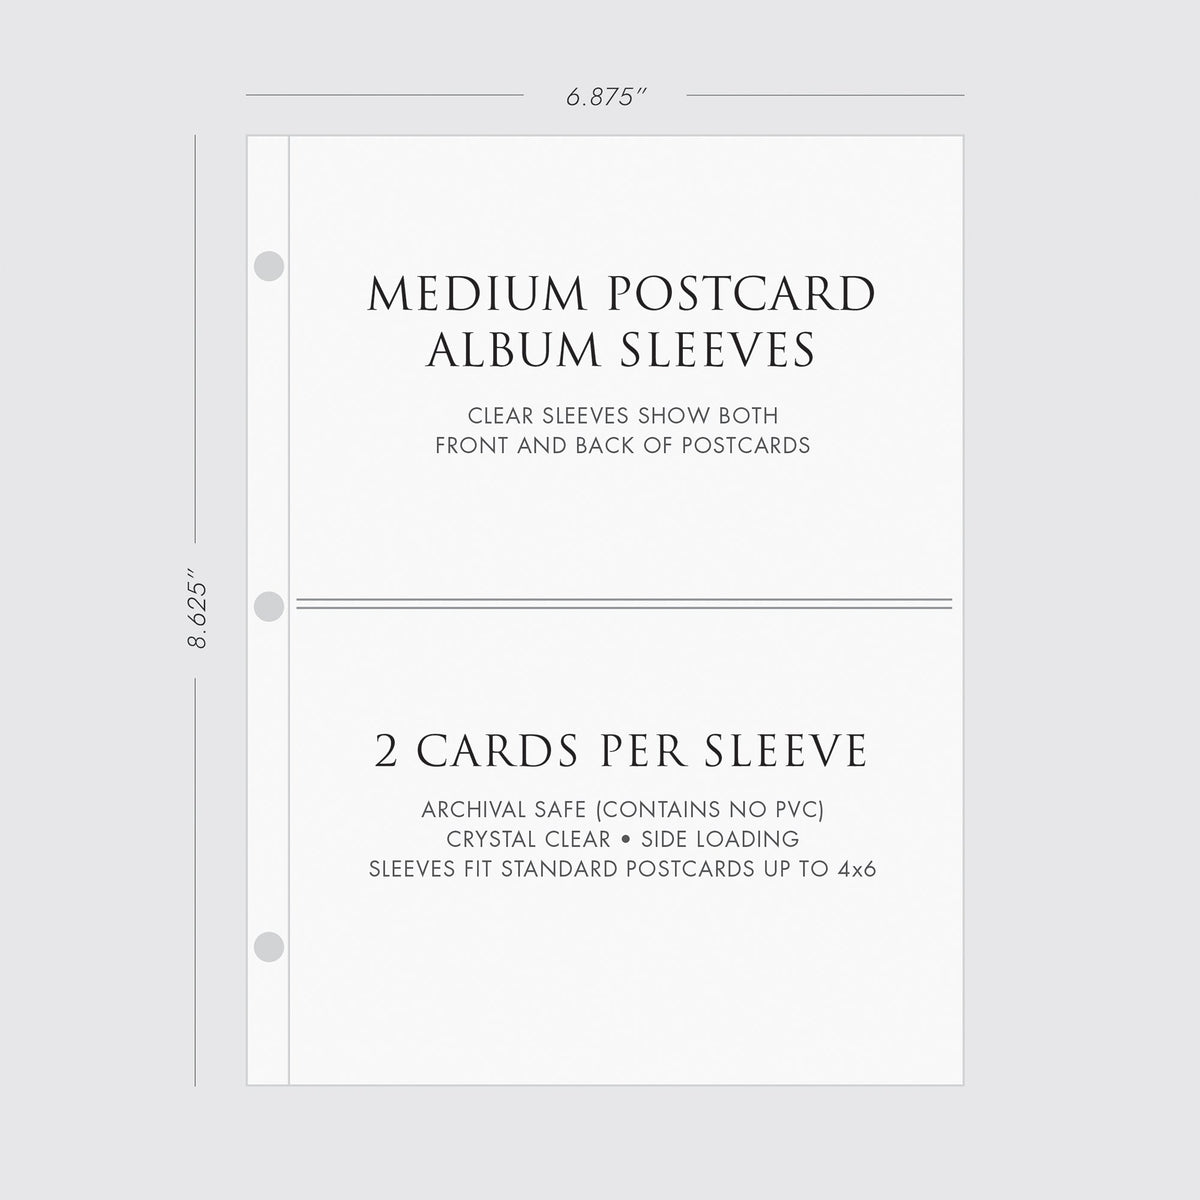 Medium Postcard Album with Amethyst Silk Cover | Fits 4x6 postcards